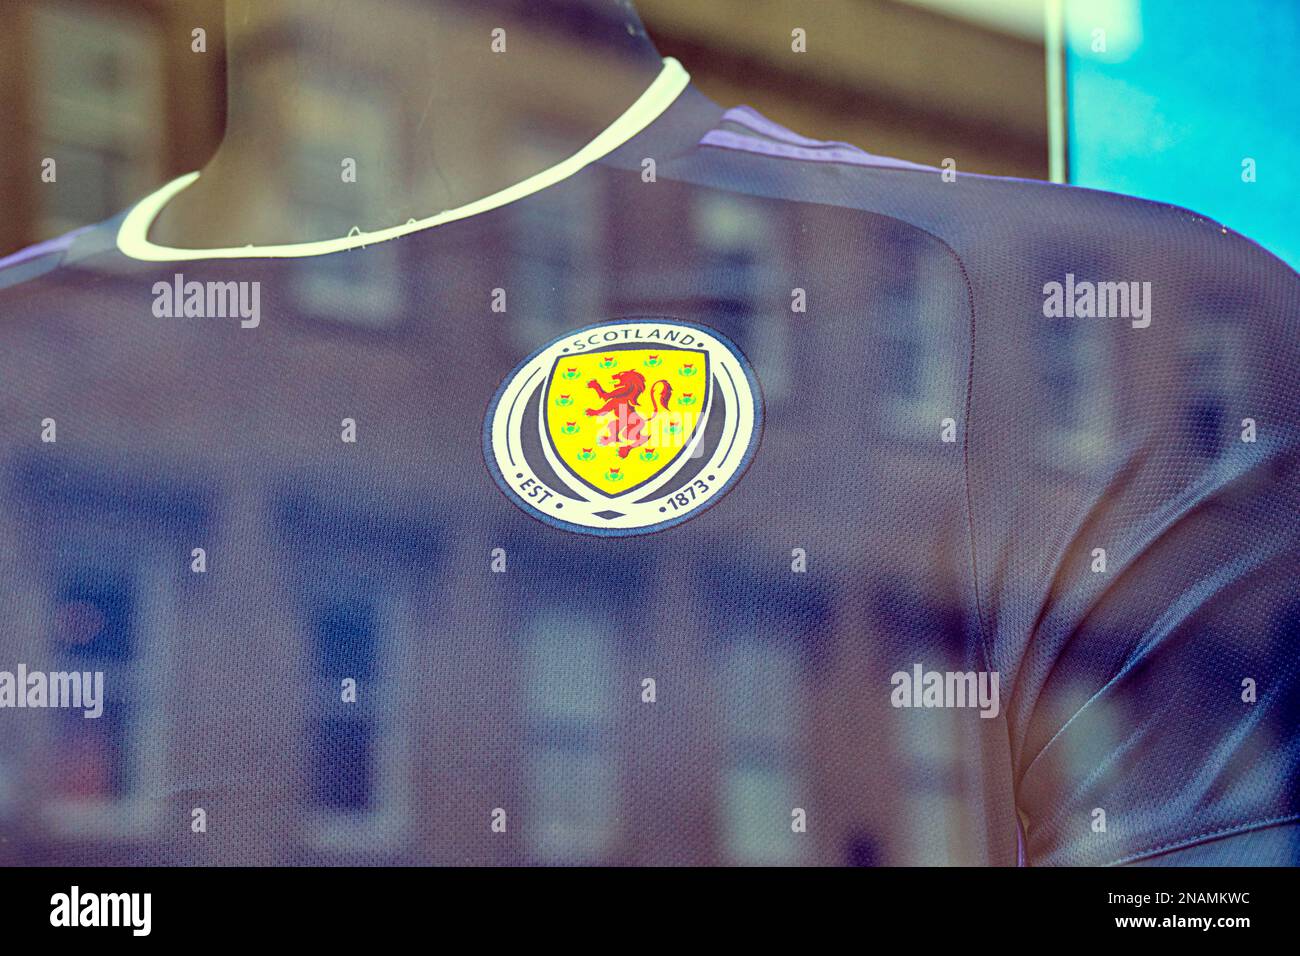 Scotland national football team shirt and badge Stock Photo